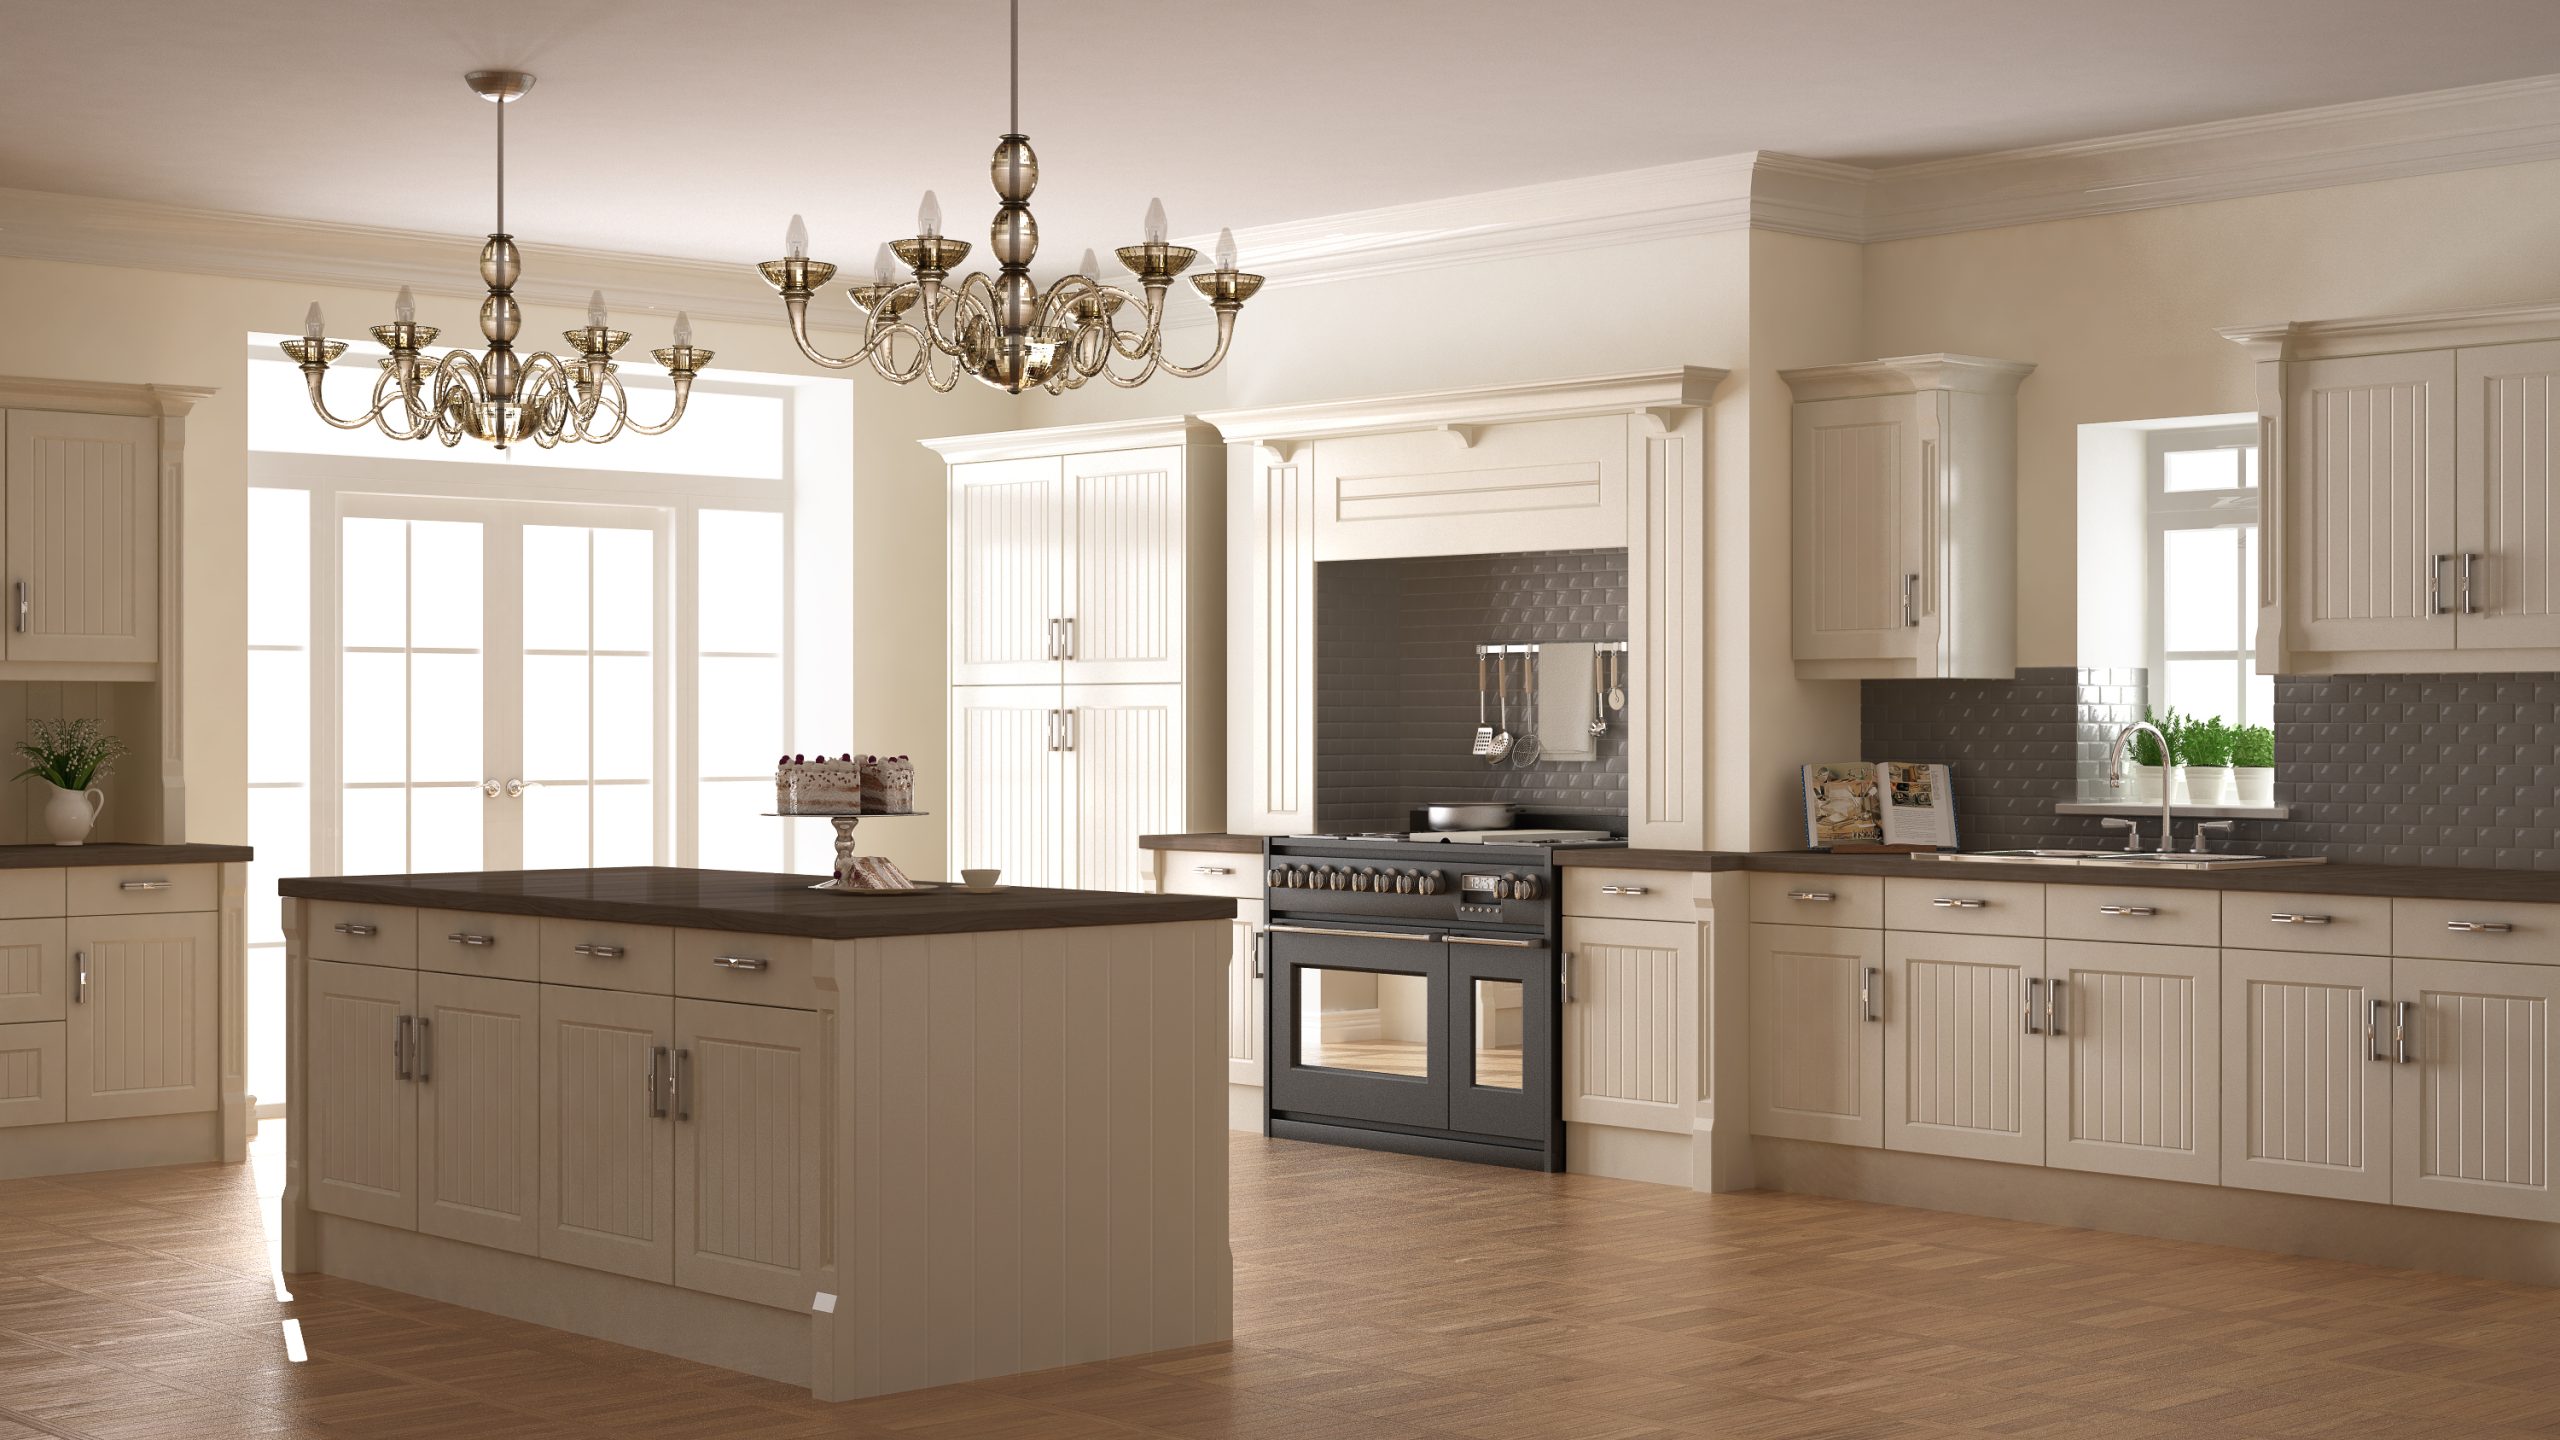 Classic,kitchen,,scandinavian,minimal,interior,design,with,wooden,details,,3d